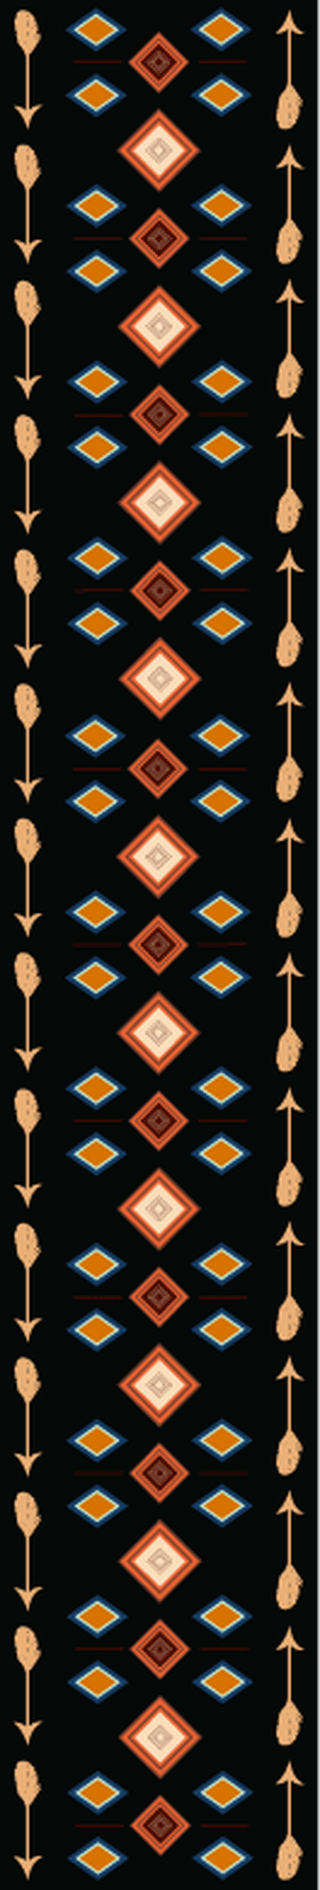 decorativepattern-templates-collection-elegant-retro-repeating-symmetric-590738